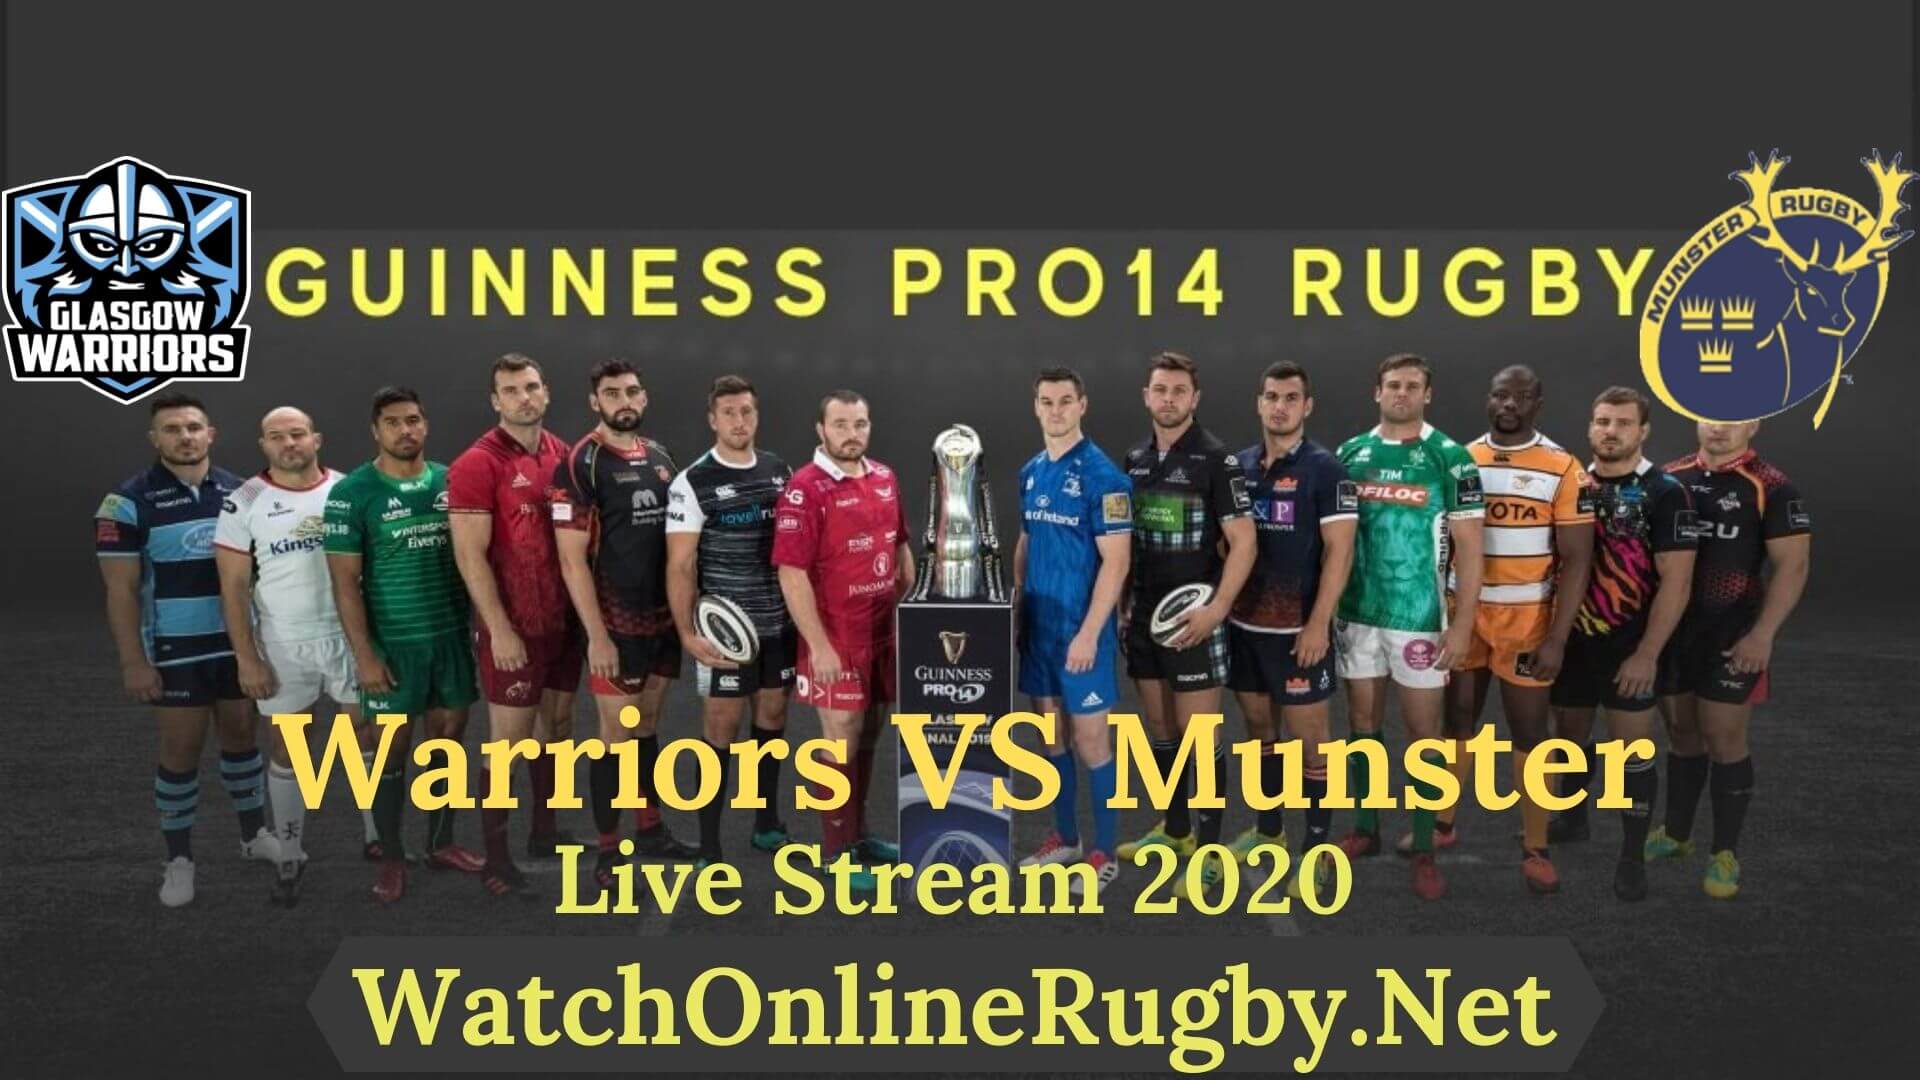 Munster vs Glasgow Warriors Rugby Live